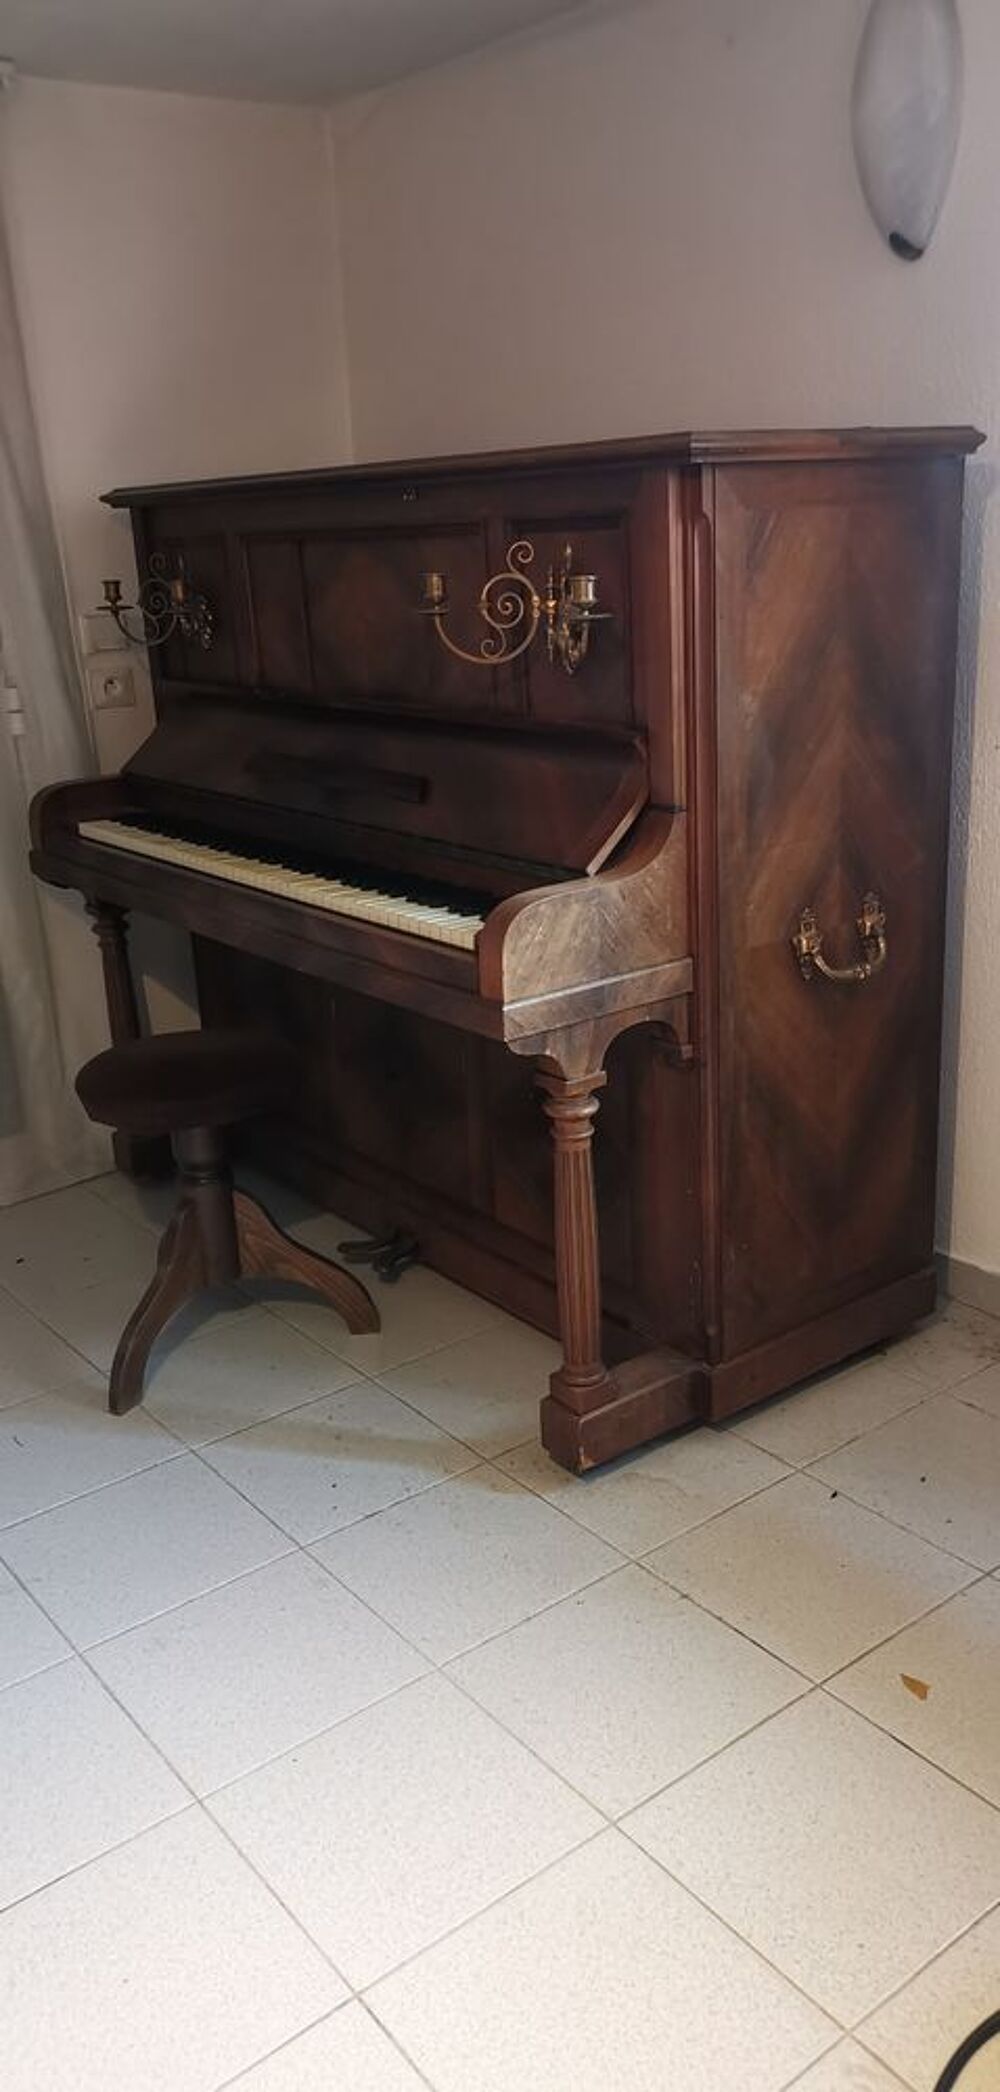 Piano droit Pleyel Instruments de musique